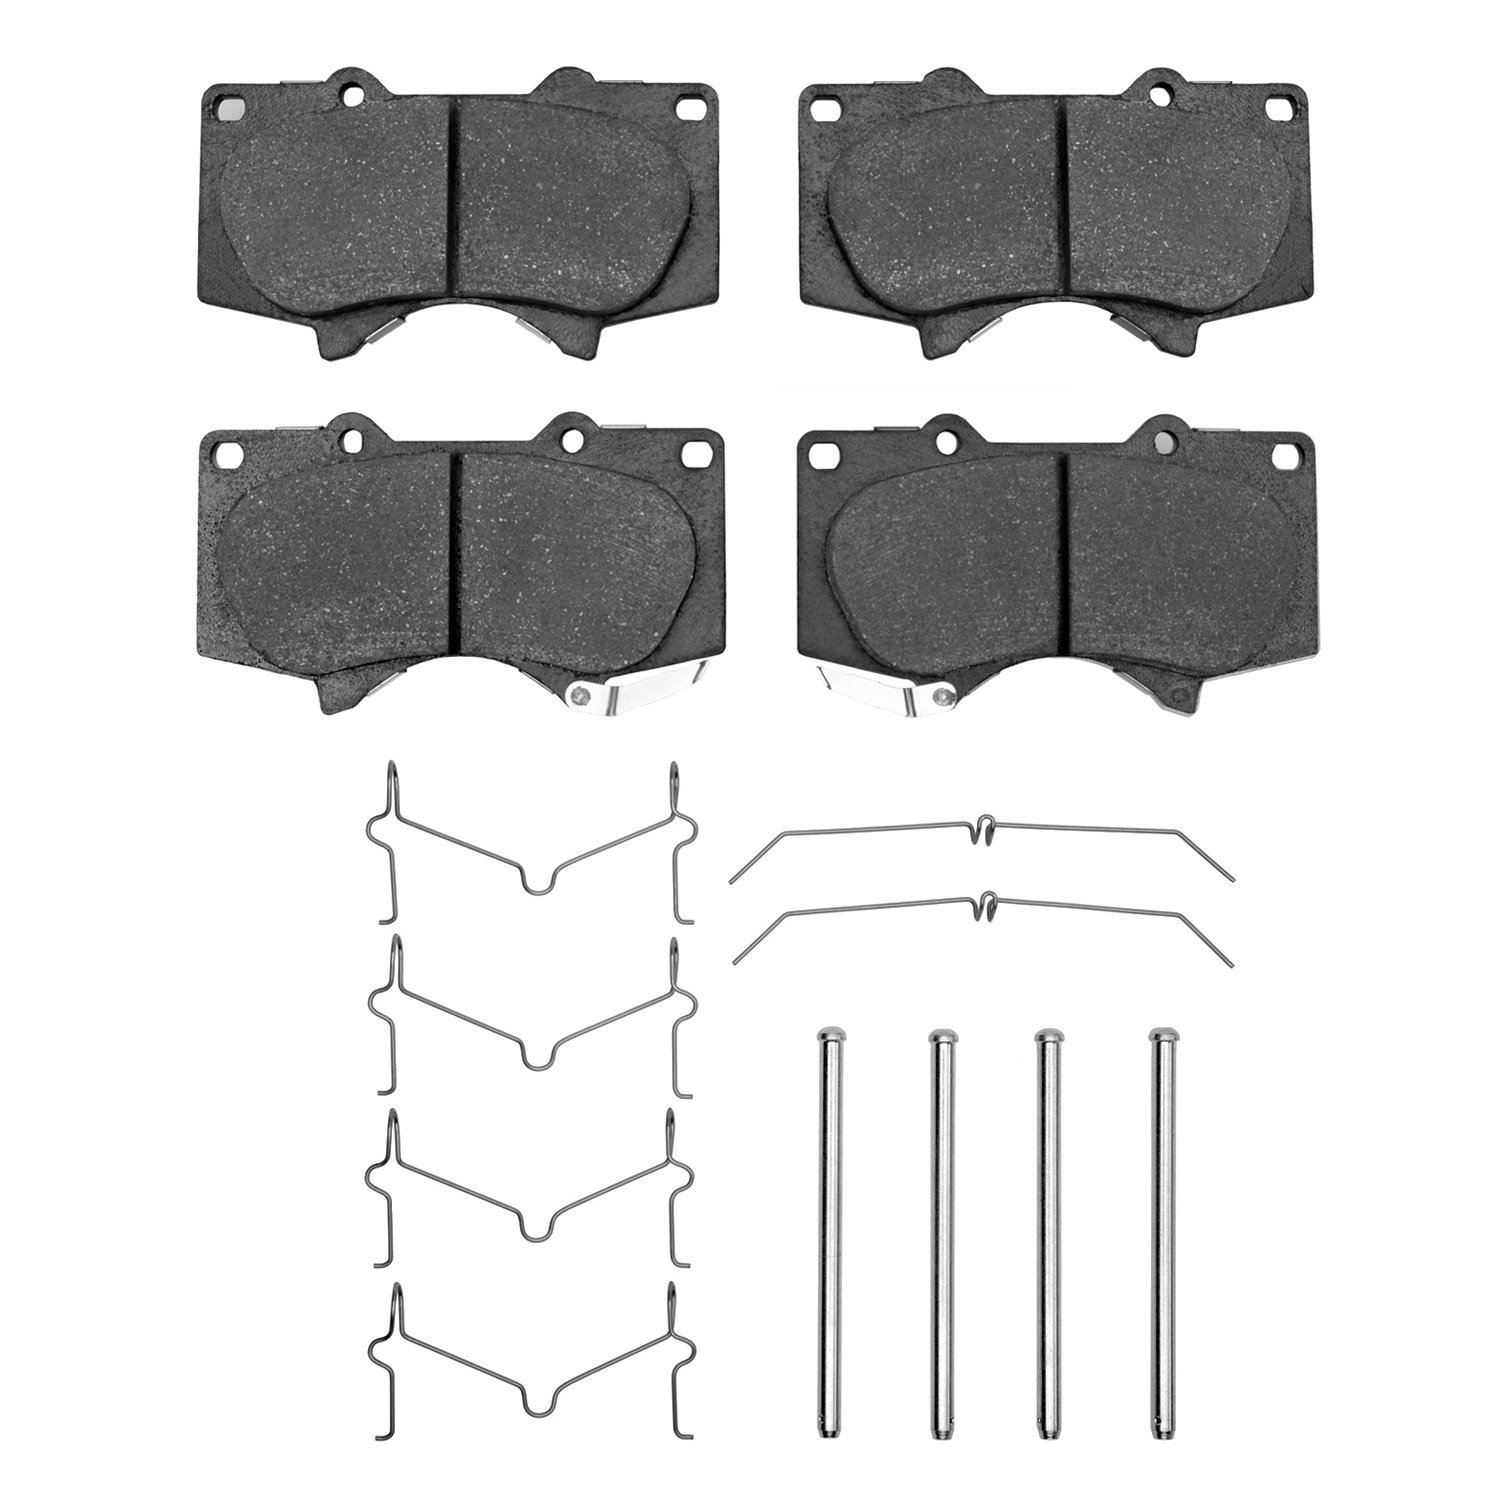 1310-0976-02 3000-Series Ceramic Brake Pads & Hardware Kit, Fits Select Lexus/Toyota/Scion, Position: Front